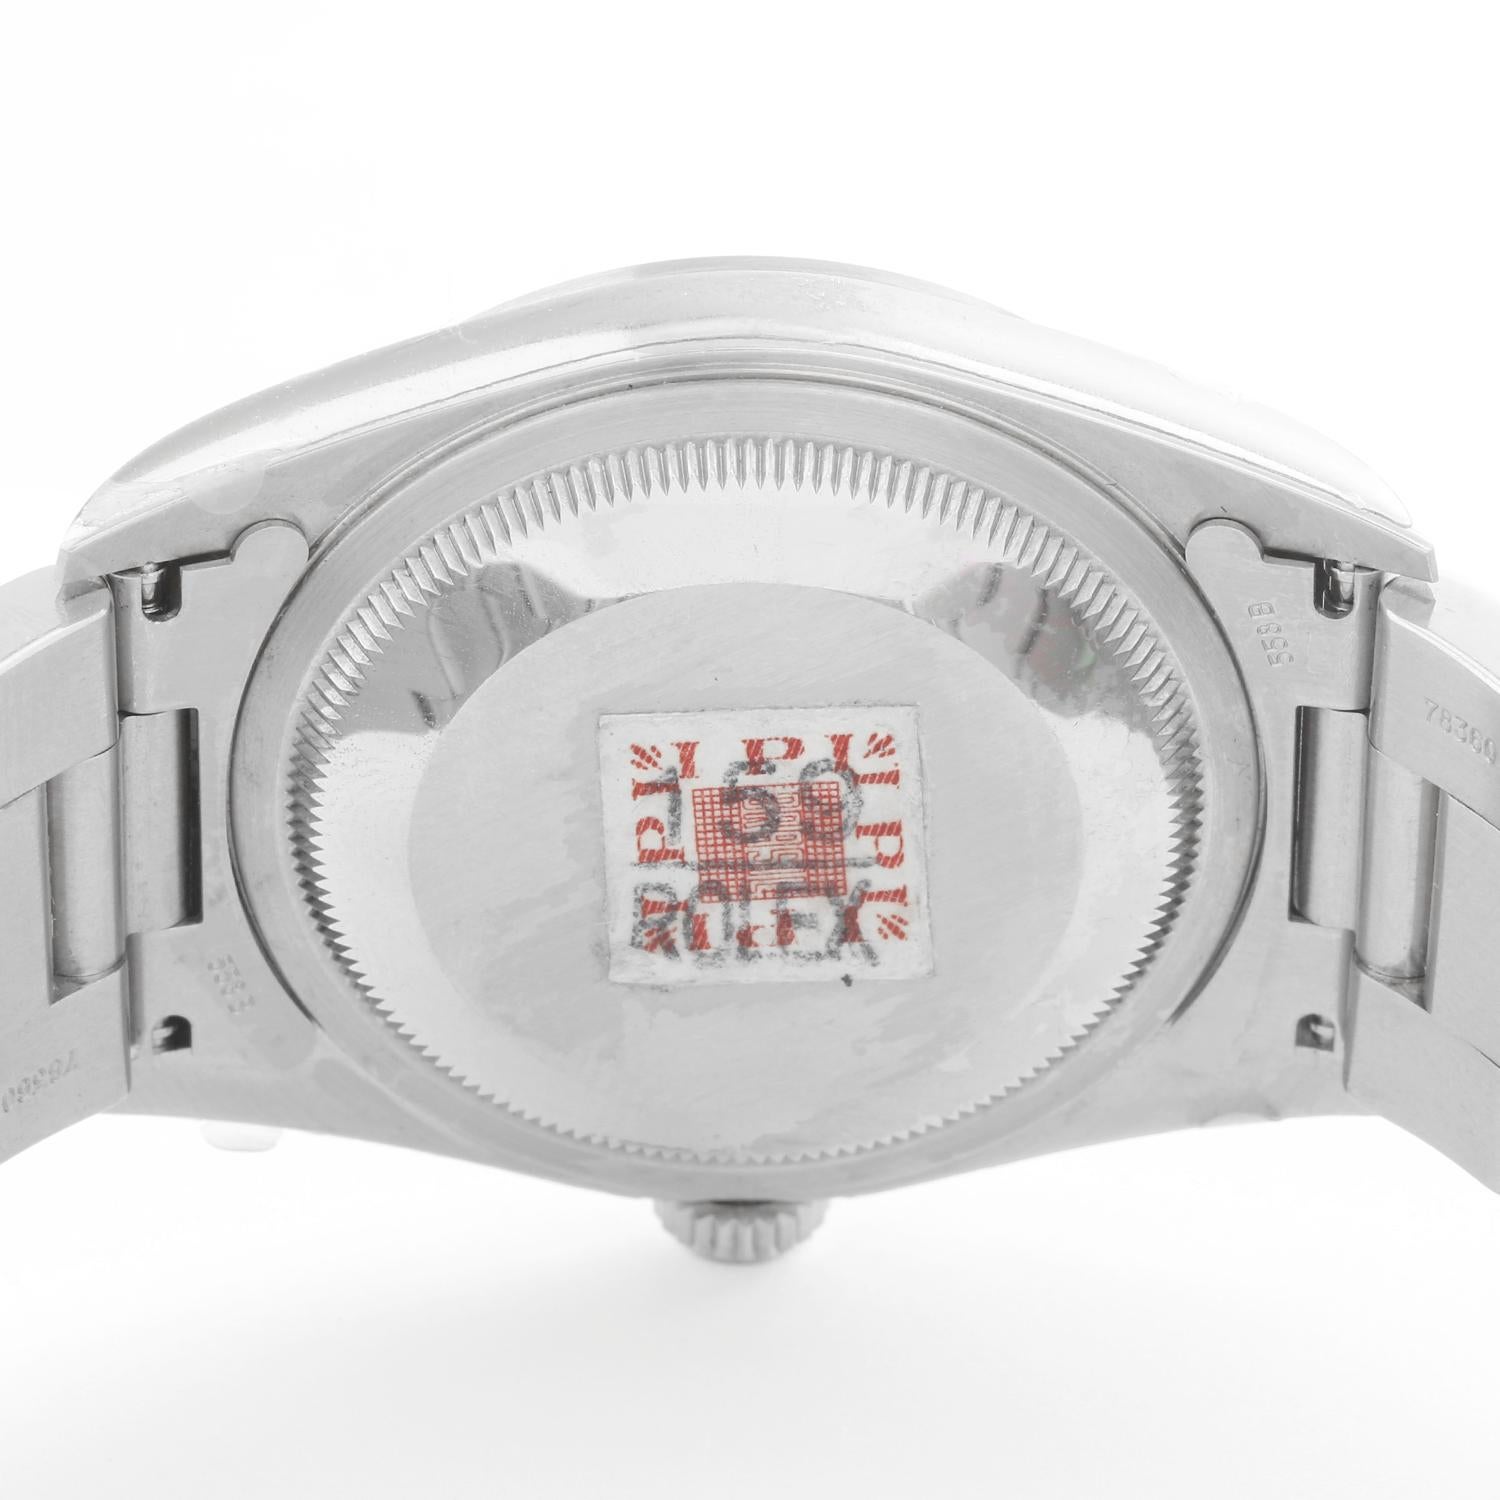 Collectors Edition Rolex Datejust Men's Stainless Steel Watch 16200 2